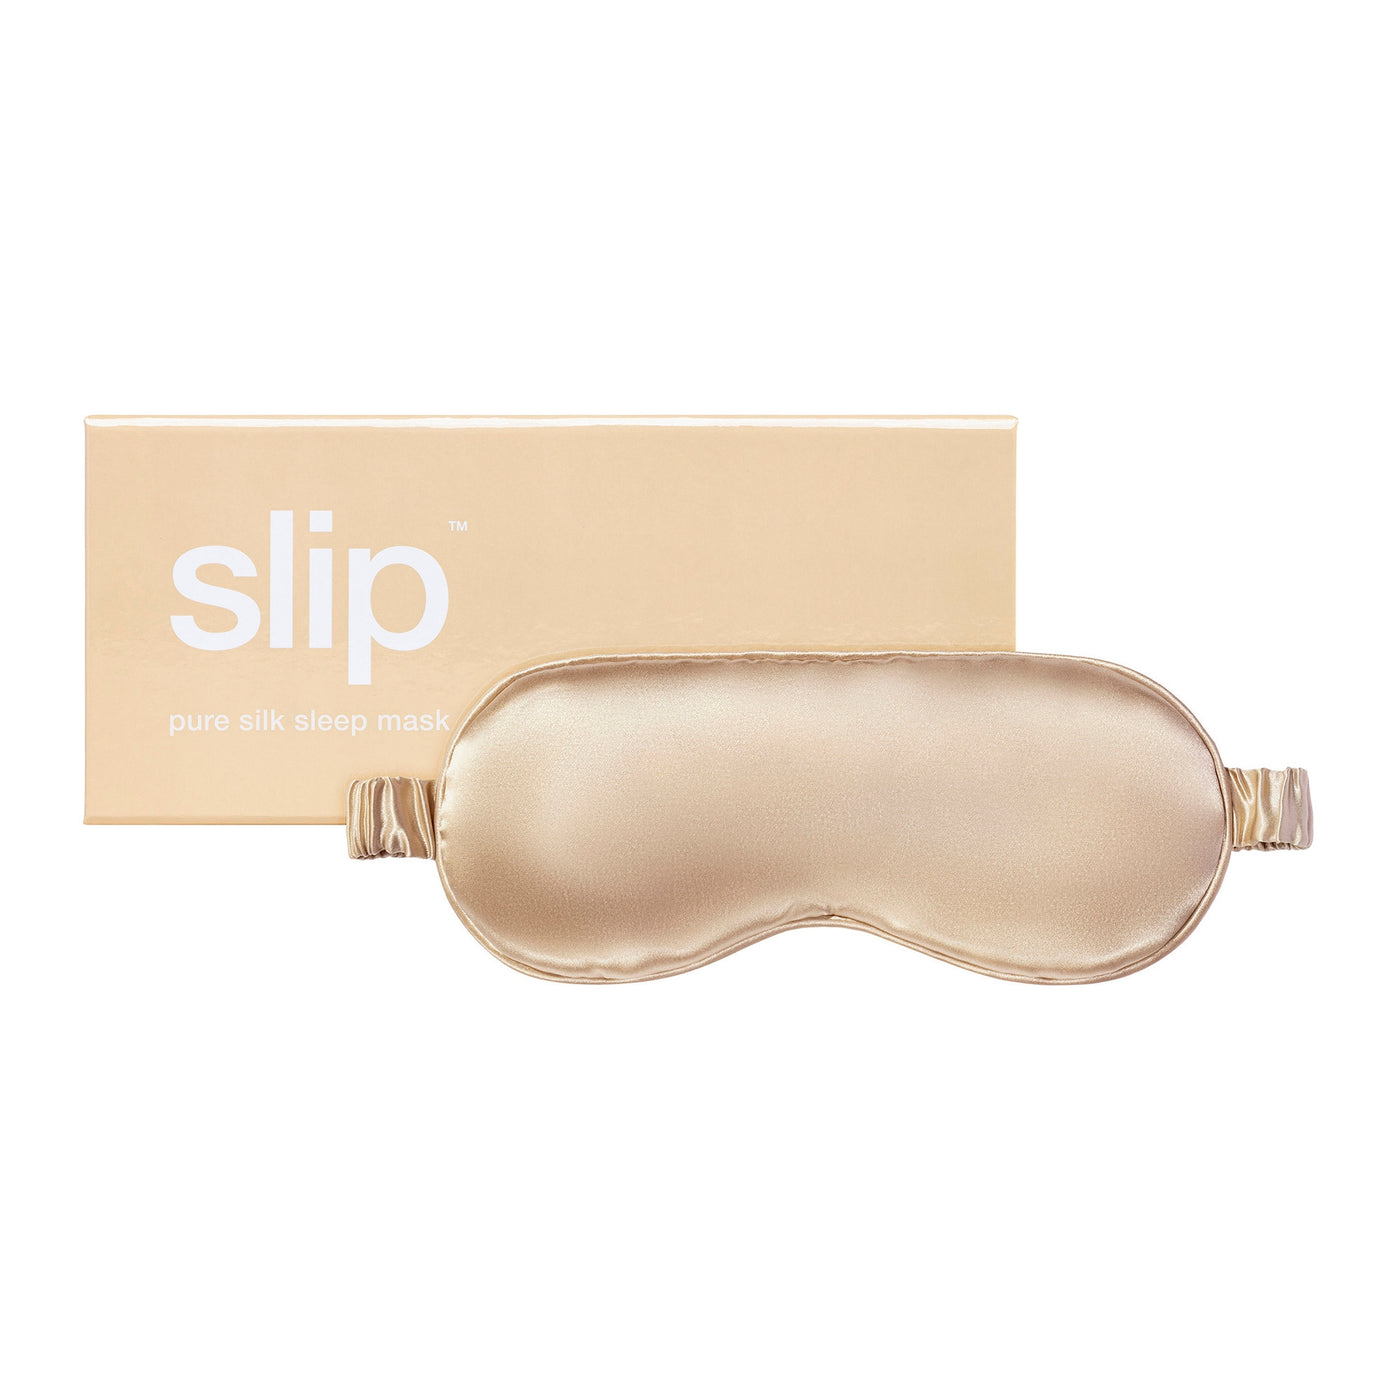 Silk Sleep Mask – Bath Accessories Co.